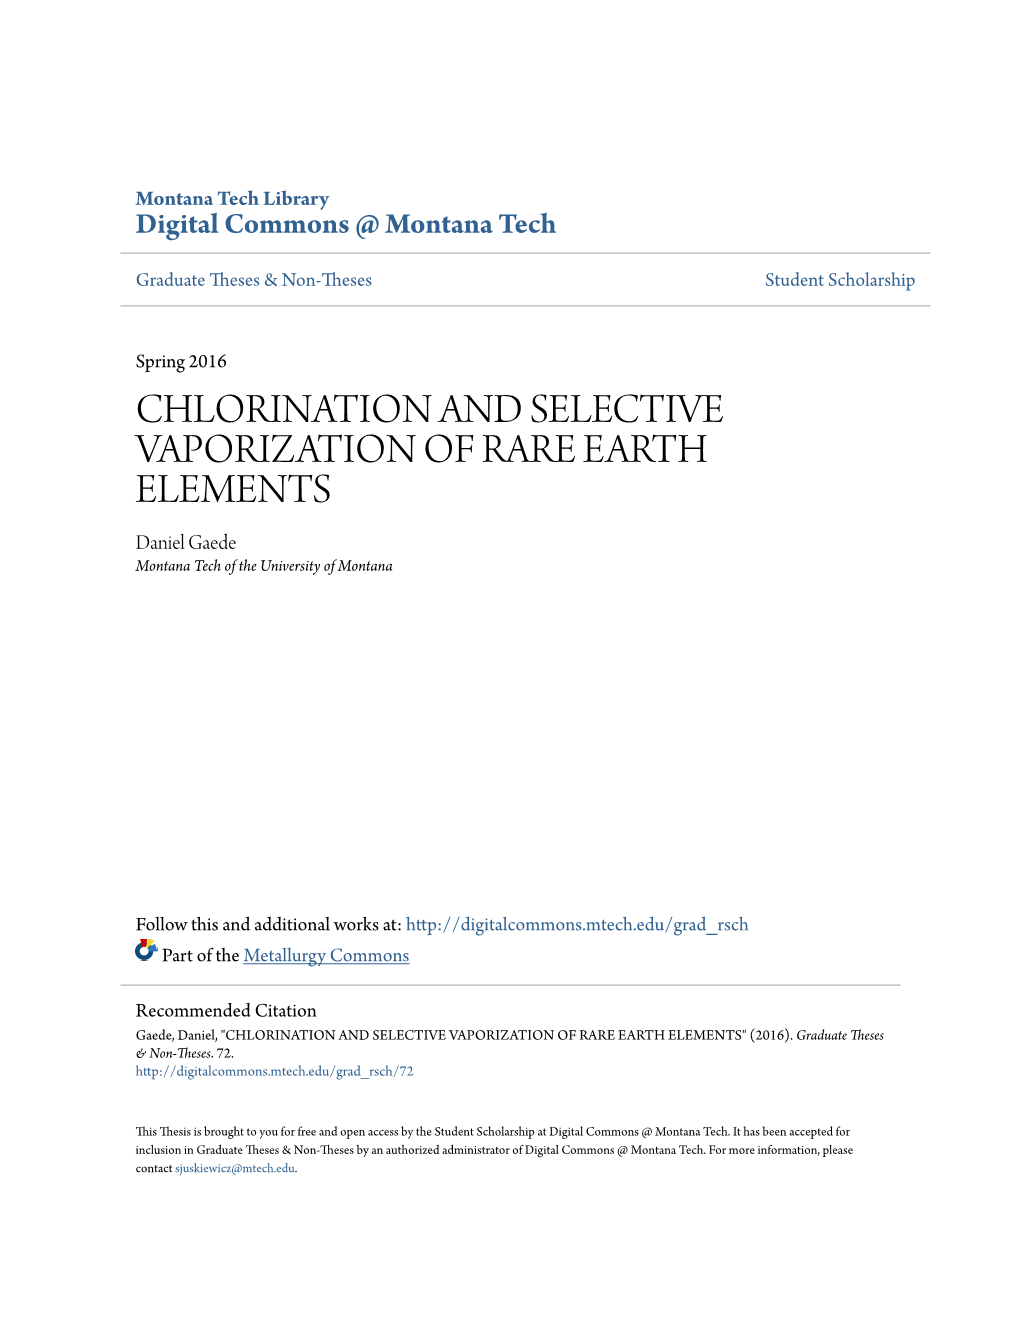 CHLORINATION and SELECTIVE VAPORIZATION of RARE EARTH ELEMENTS Daniel Gaede Montana Tech of the University of Montana